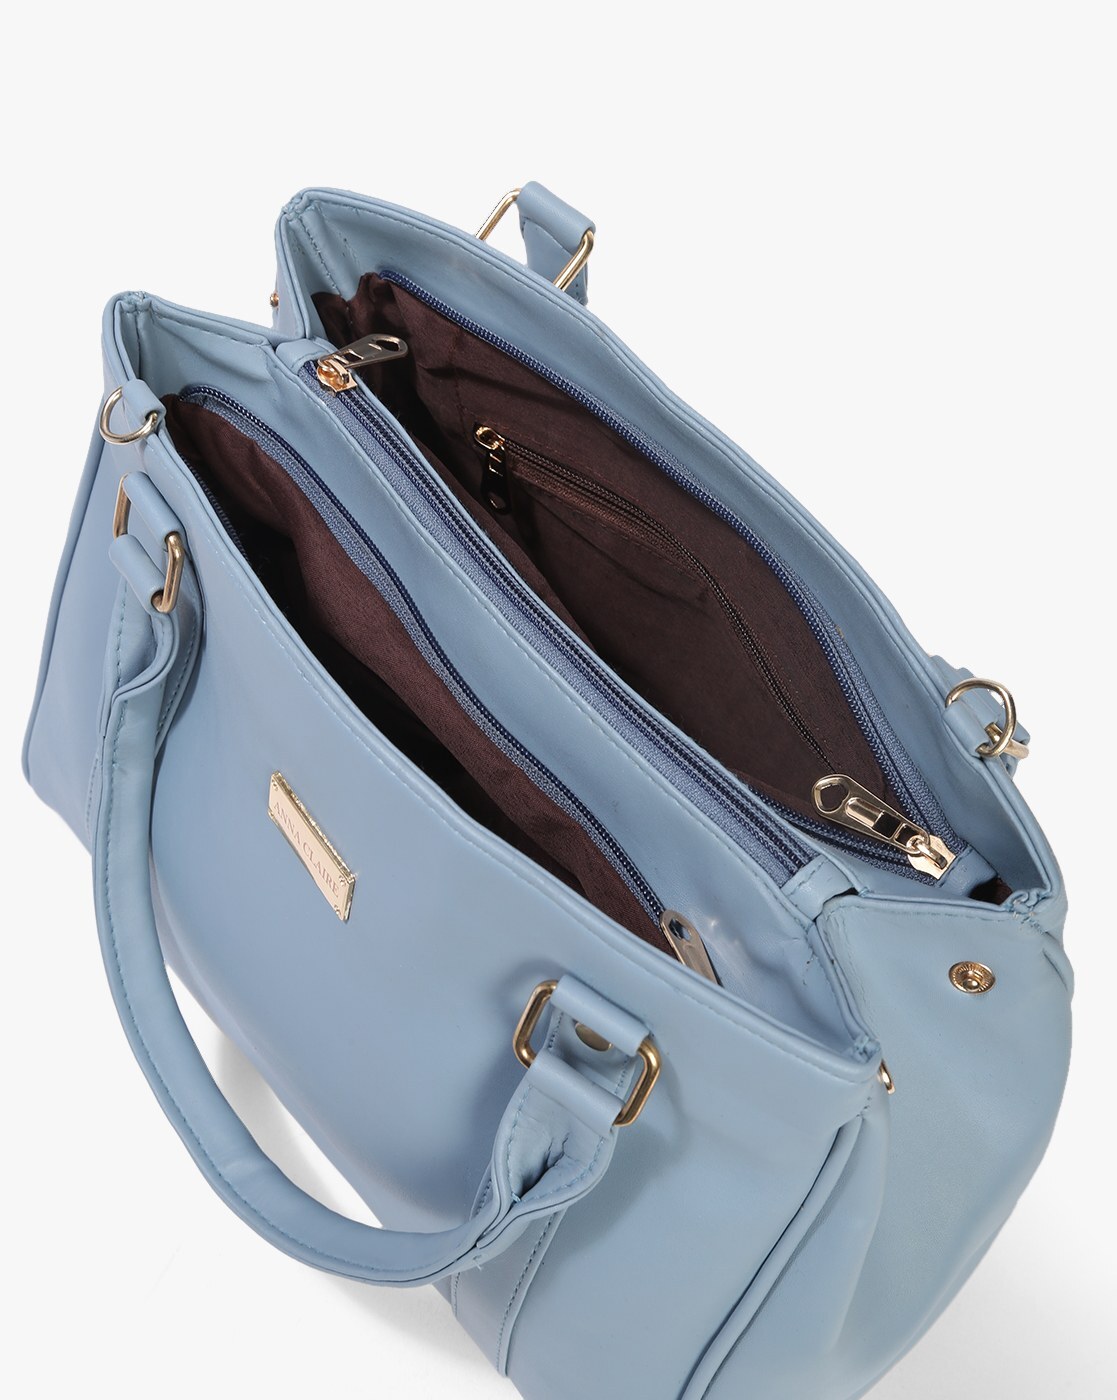 Buy Siri ram purse palace handbag for women sky blue colour at Amazon.in